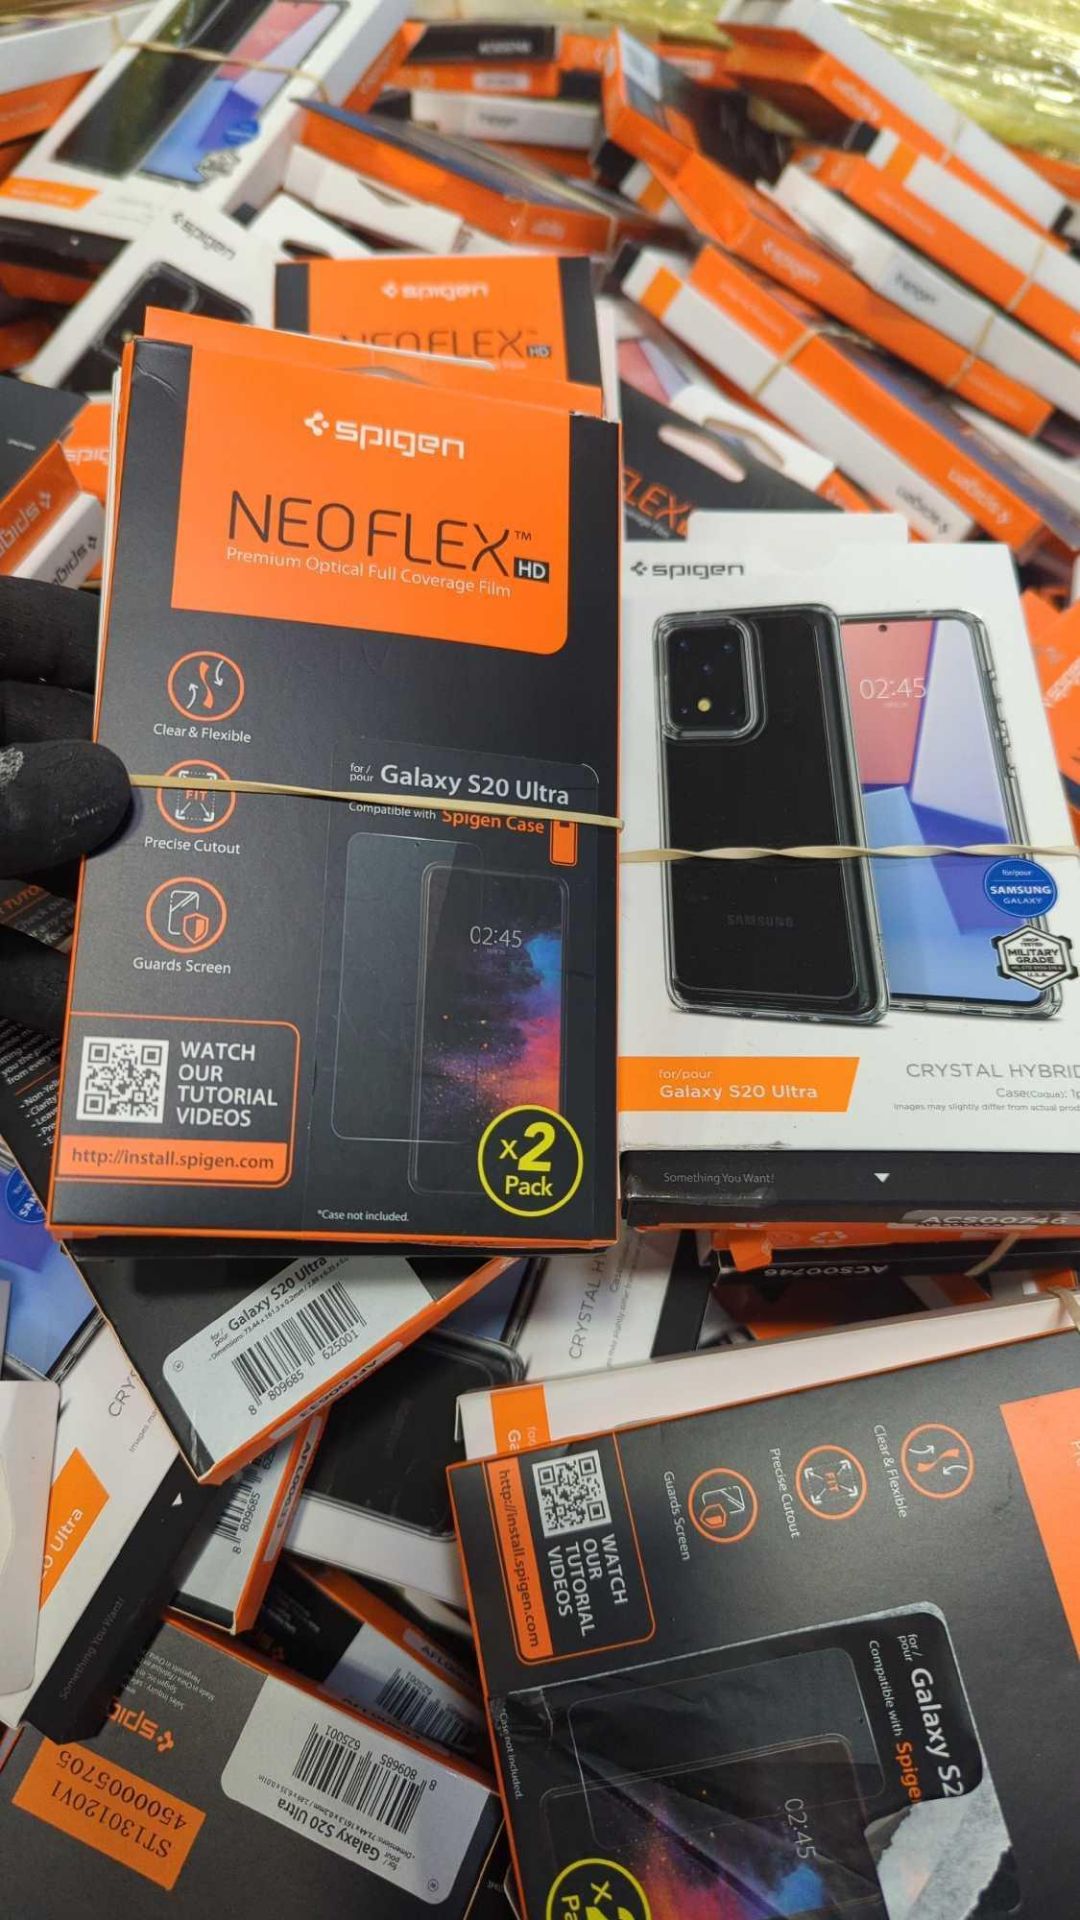 GL- Galaxy s20 Ultra Spigen phone case and neoflex film